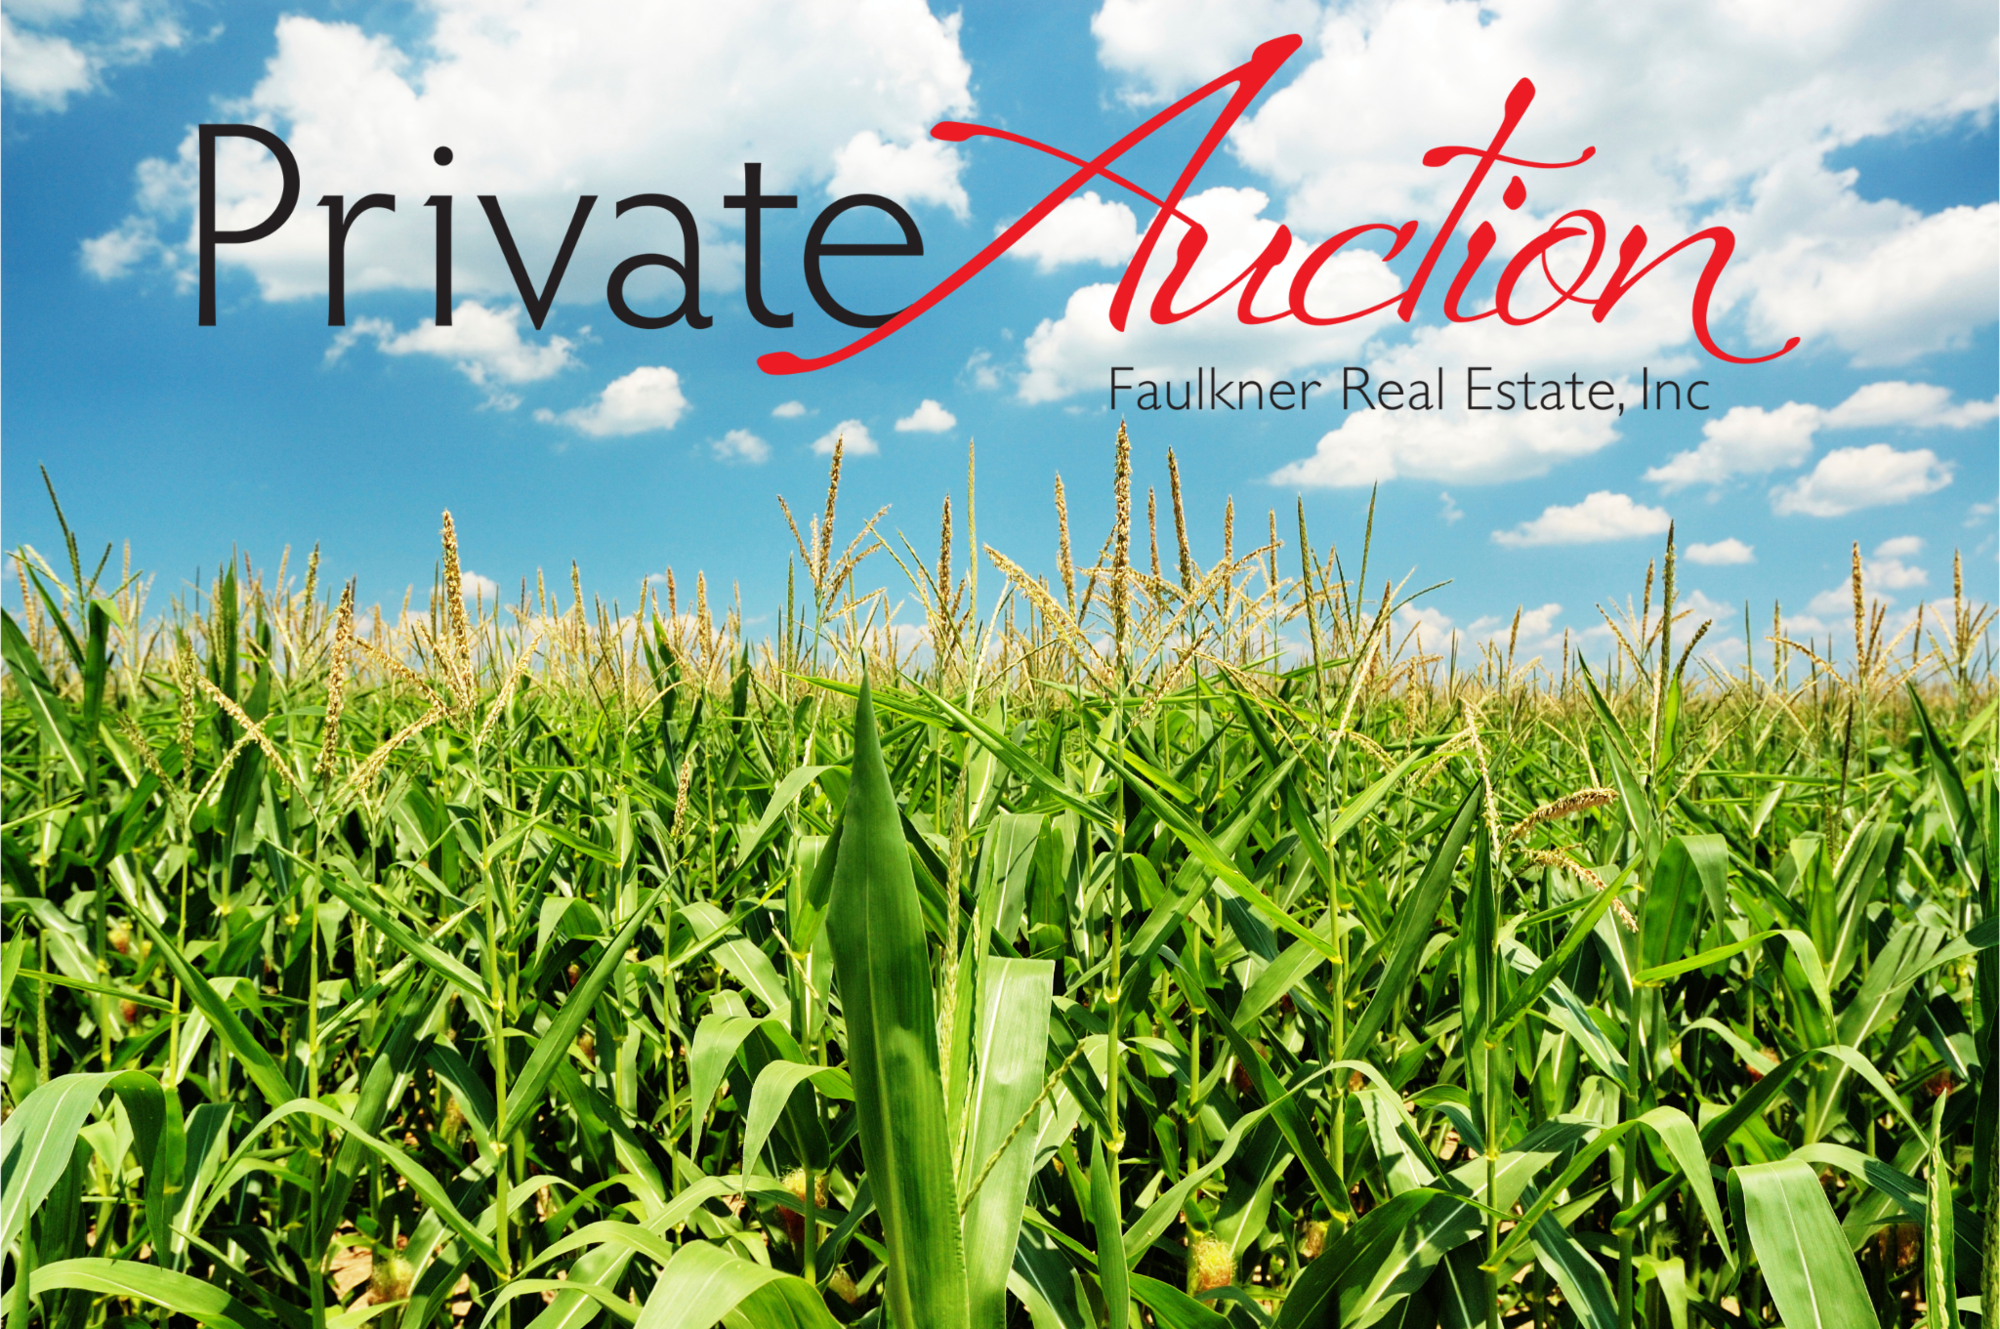 Private Auction Faulkner Real Estate, Inc